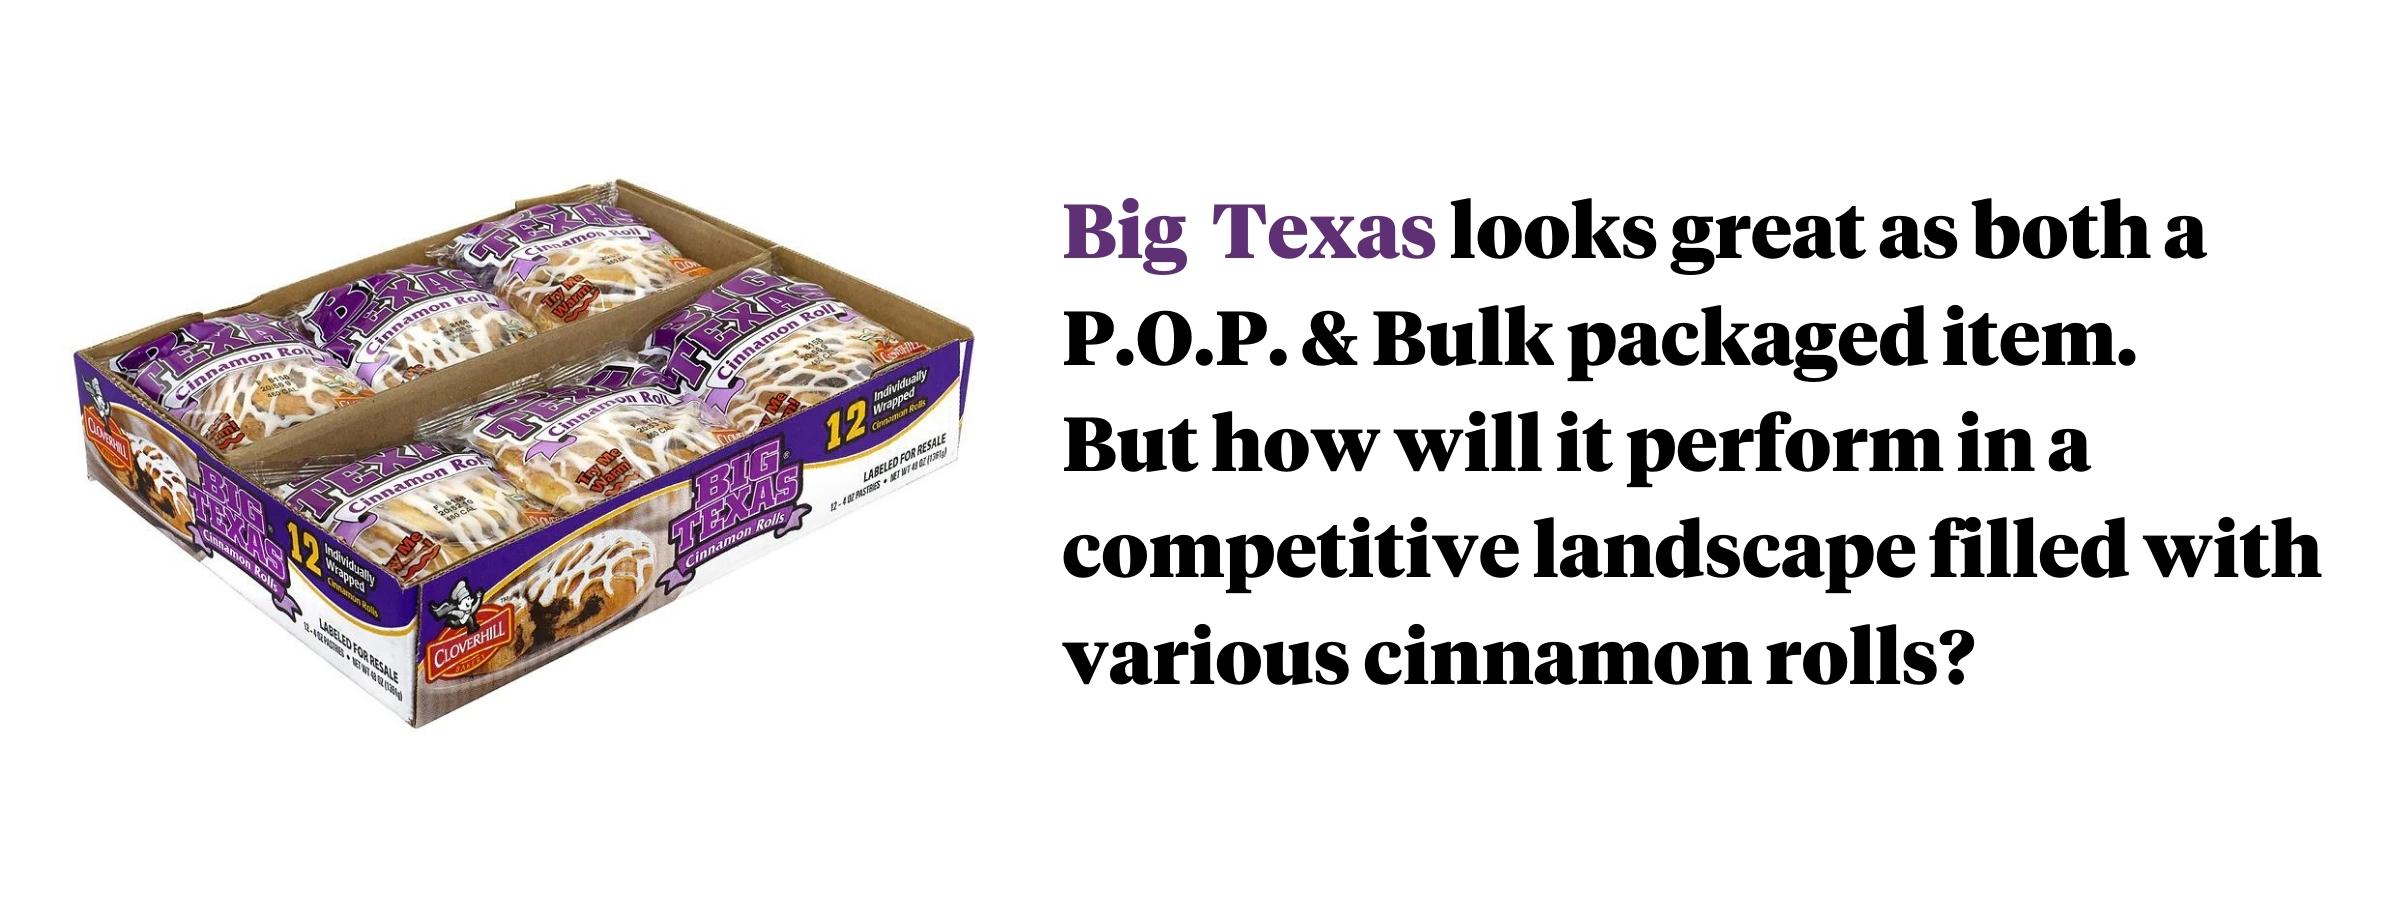 Big Texas Cinnamon Roll Packaging Design